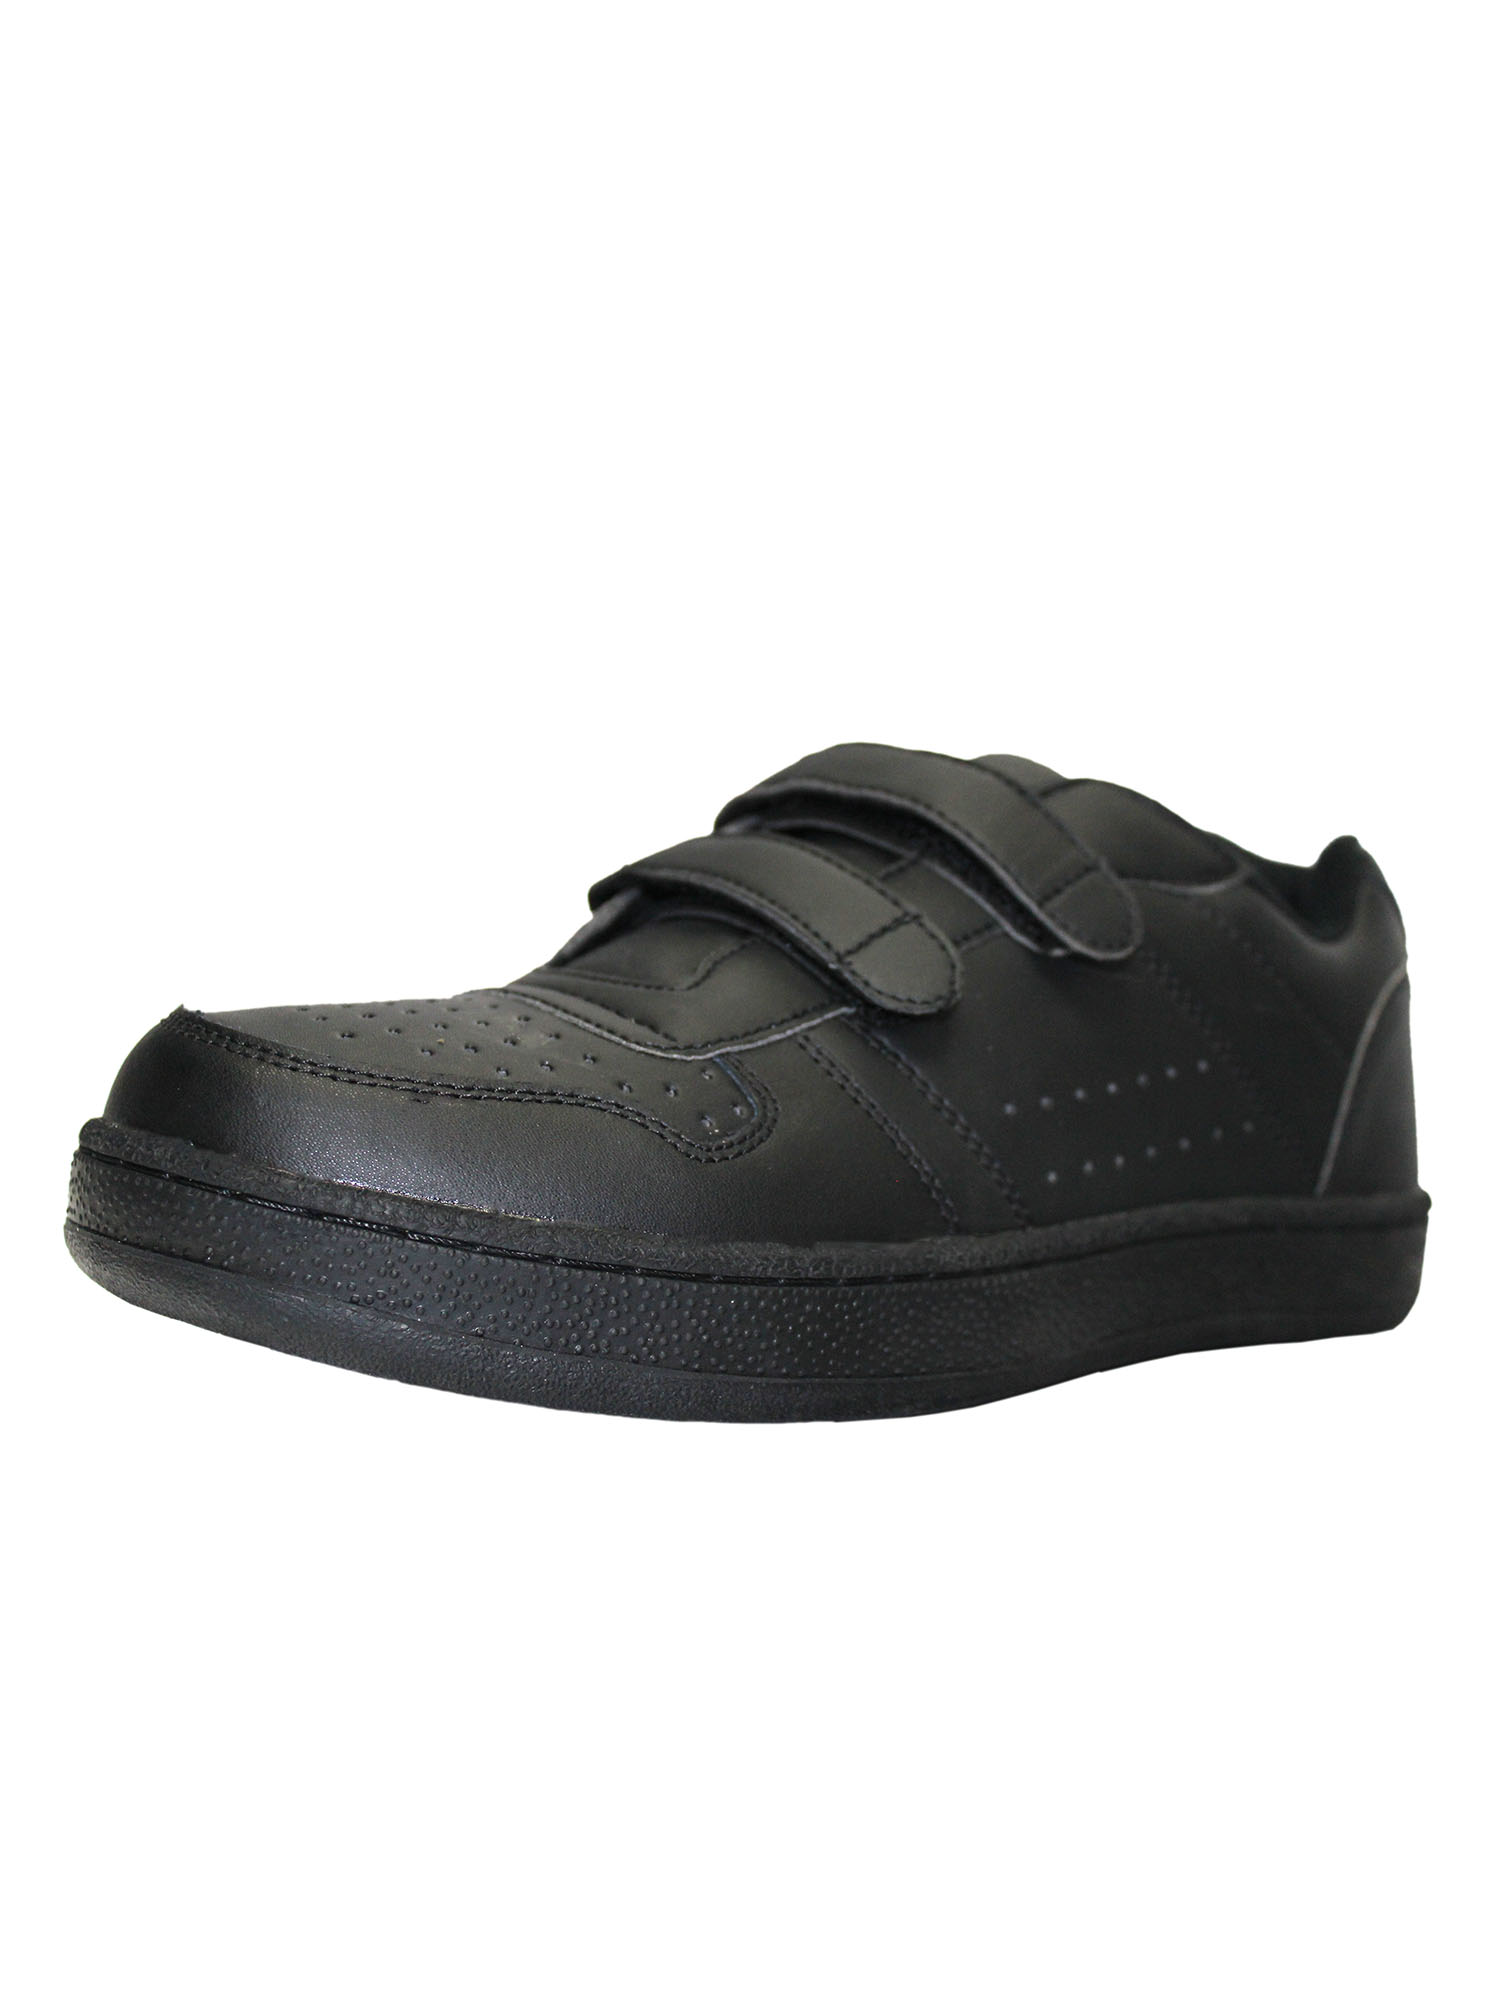 Tanleewa Men's Leather Strap Sneakers Lightweight Hook and Loop Walking Shoe Size 6.5 Adult Male - image 1 of 4